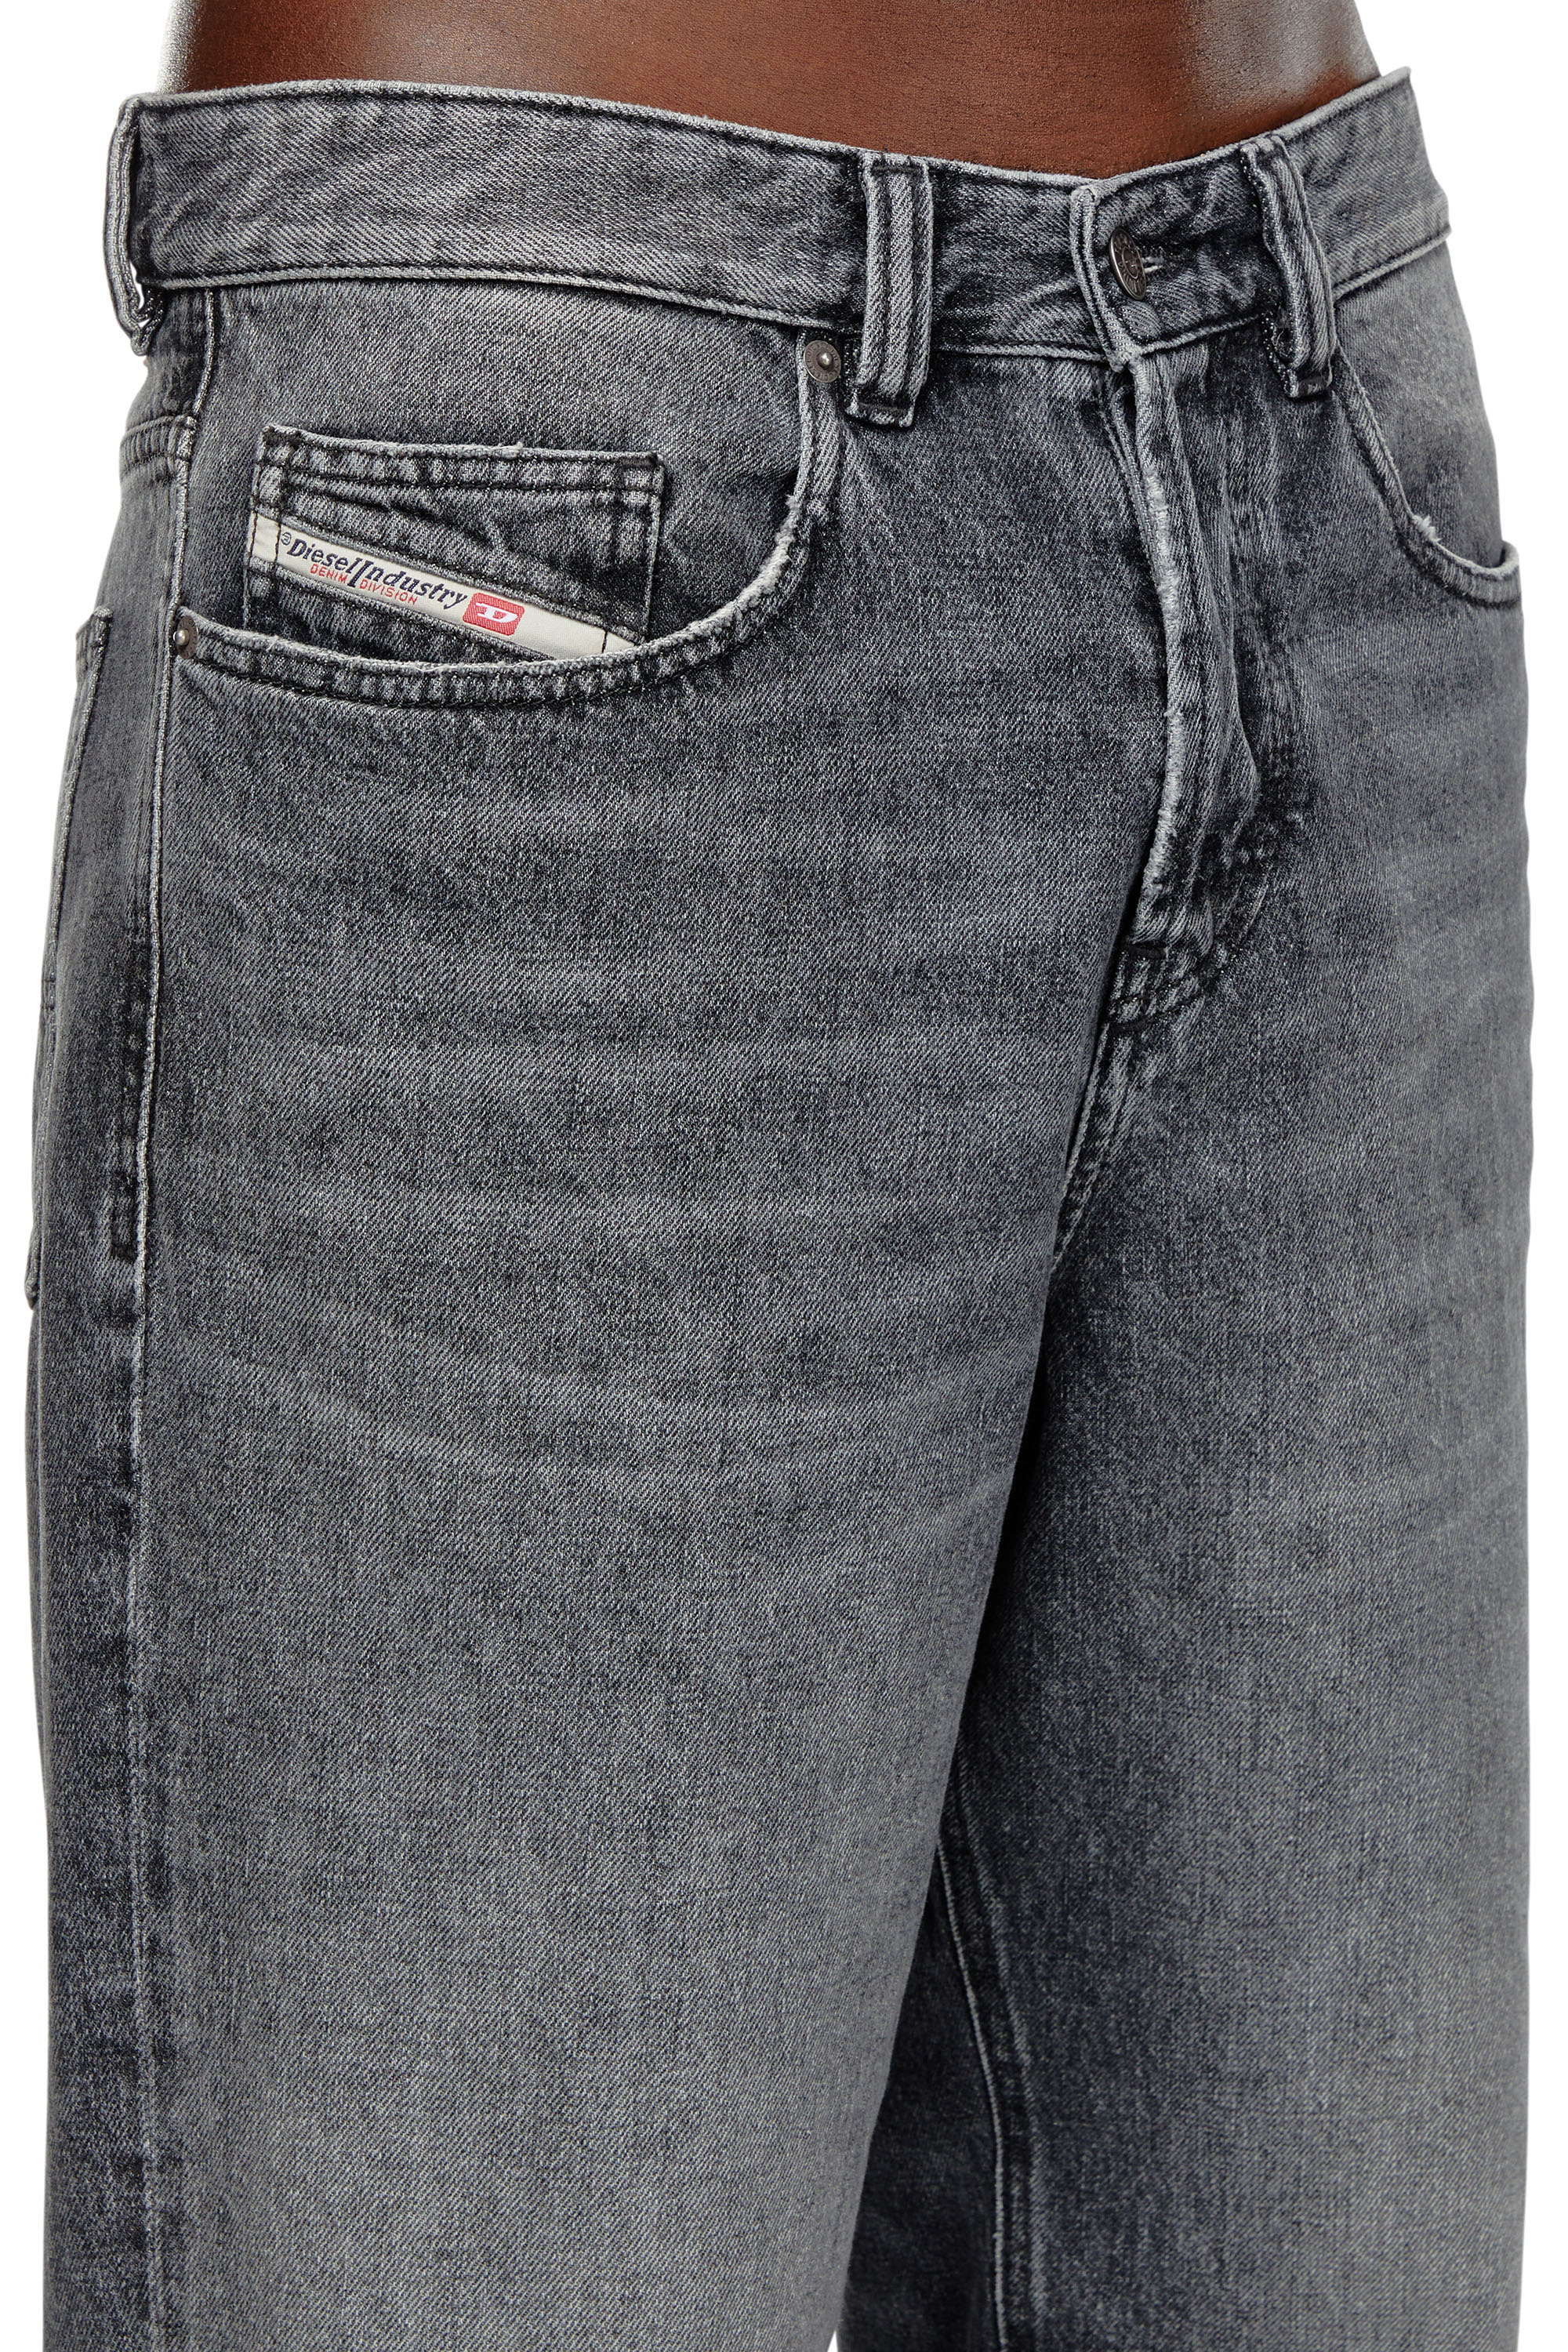 Diesel - Straight Jeans 2001 D-Macro 007X3, Hombre Straight Jeans - 2001 D-Macro in Gris - Image 5